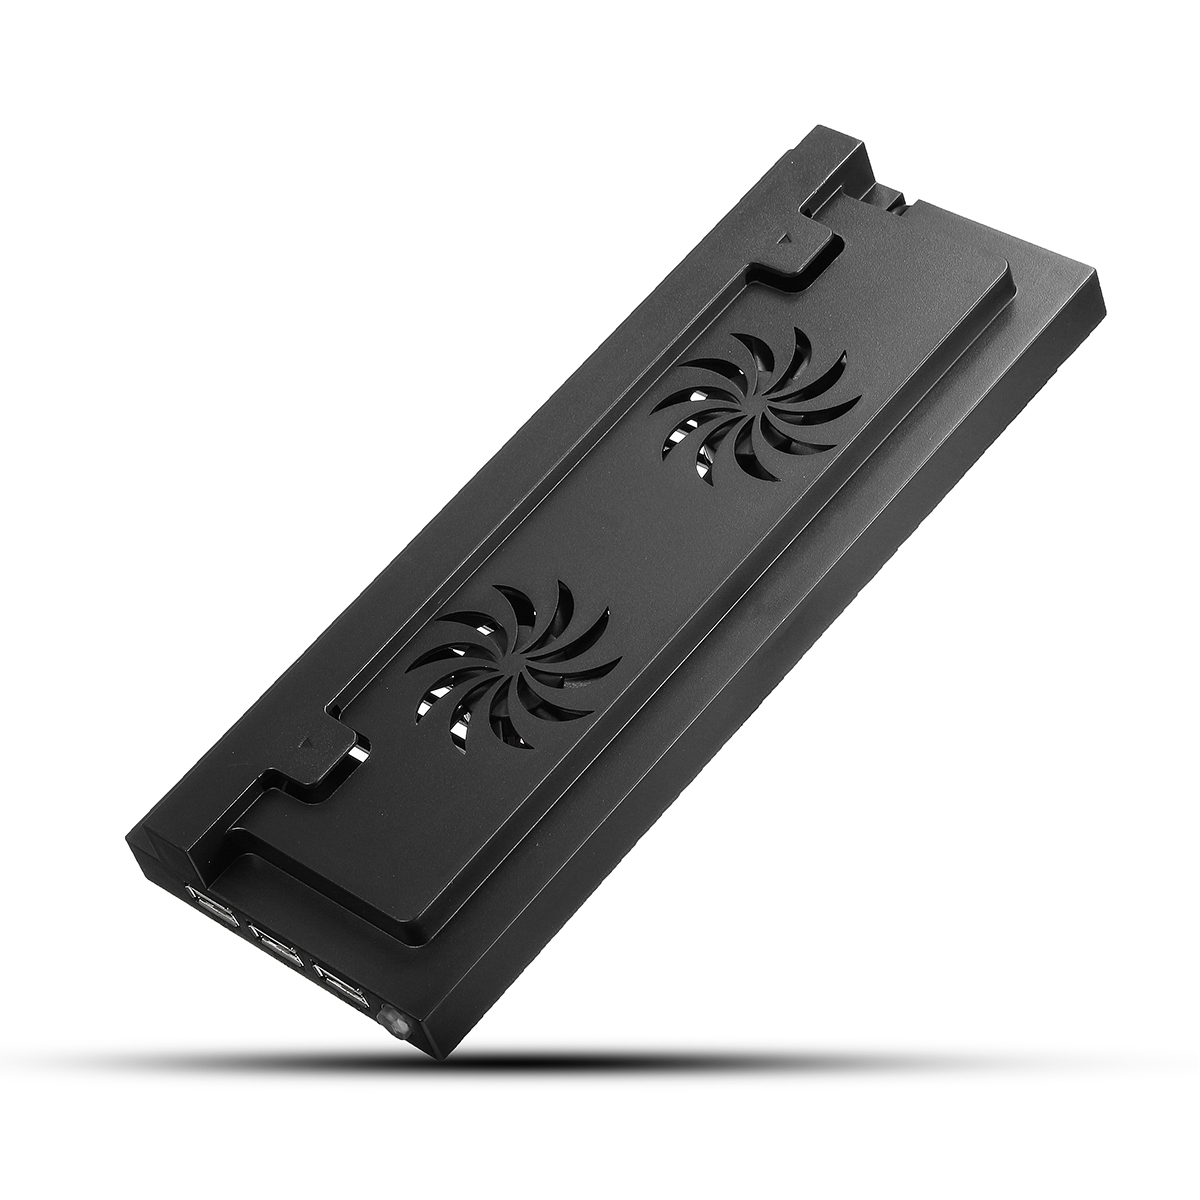 

X-996 Питание от порта USB Dual Fan Cooler Подставка для зарядки док-станции для контроллера Xbox One